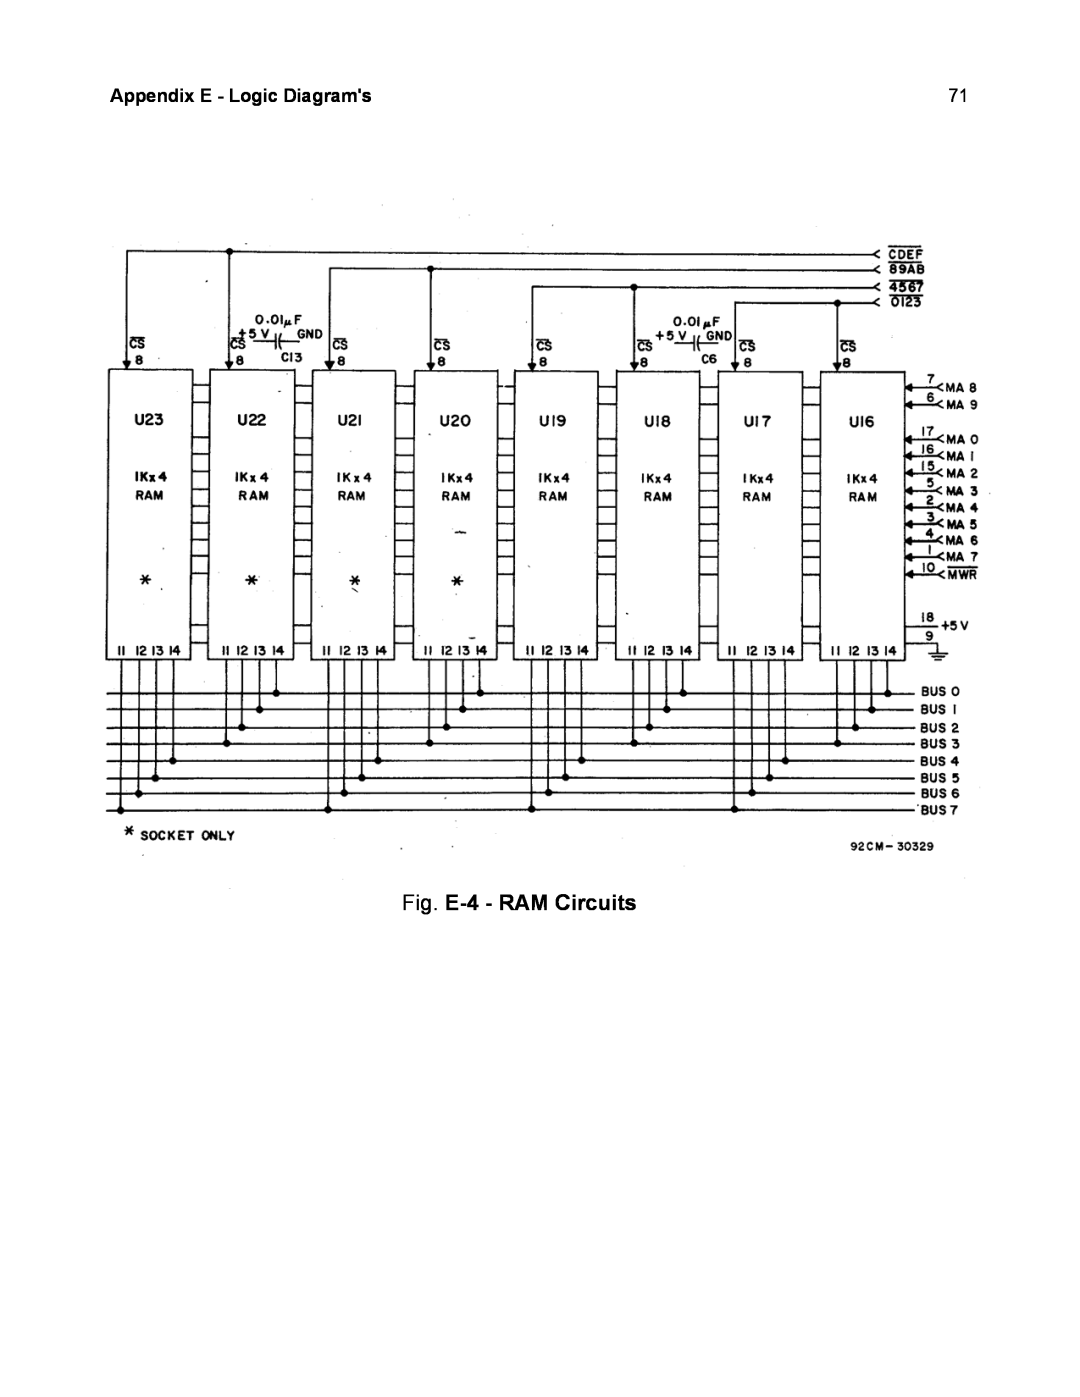 RCA CDP18S711 manual Fig. E-4- RAM Circuits, Appendix E - Logic Diagrams 